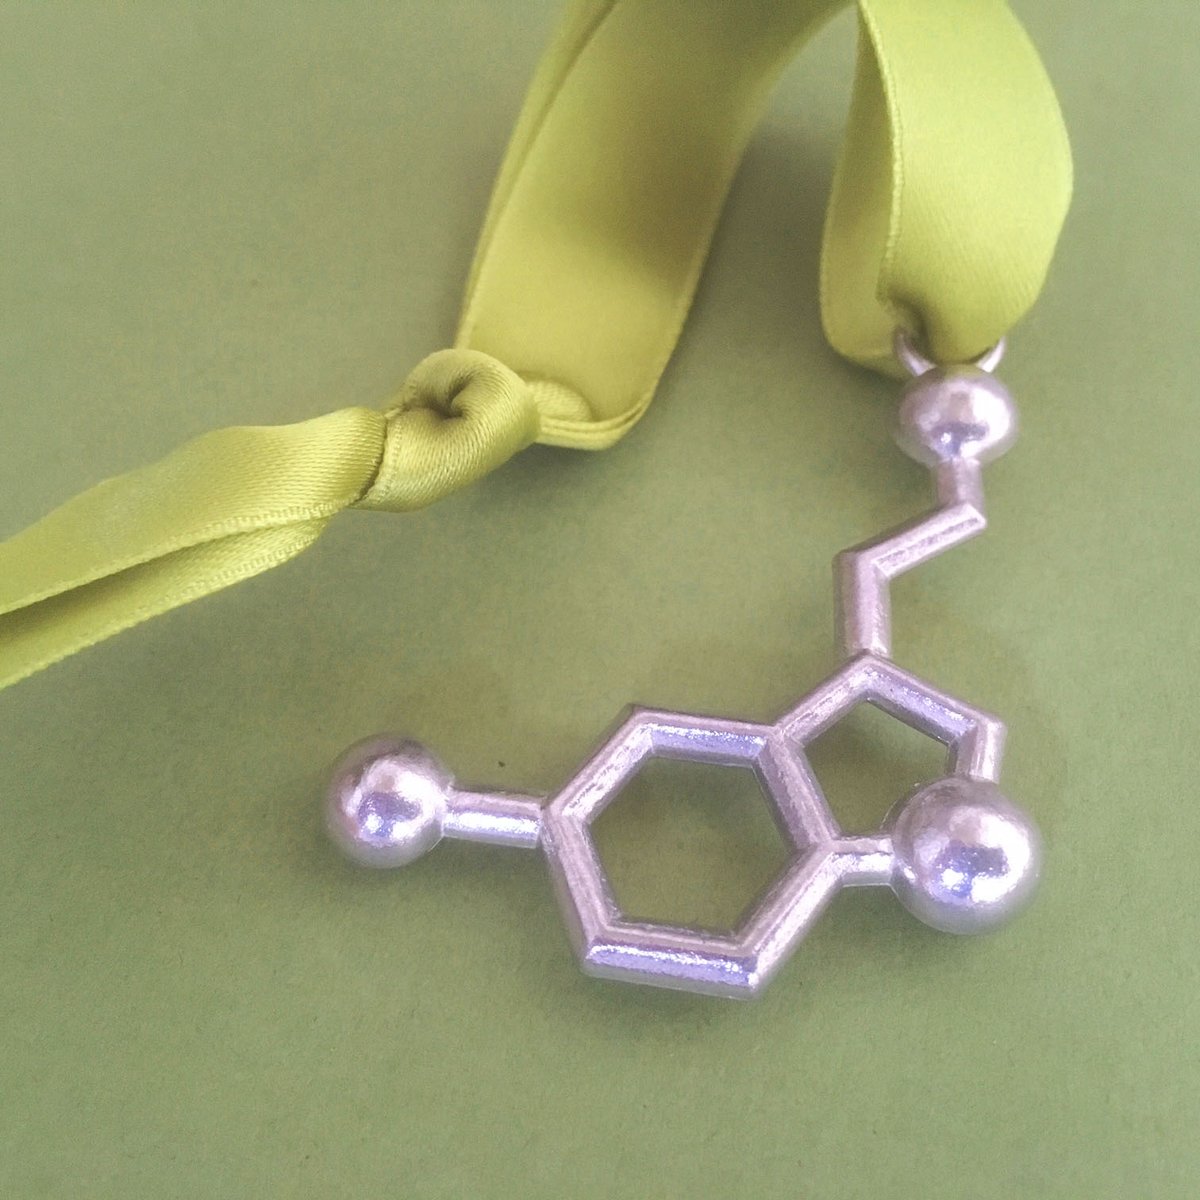 Image of serotonin ornament